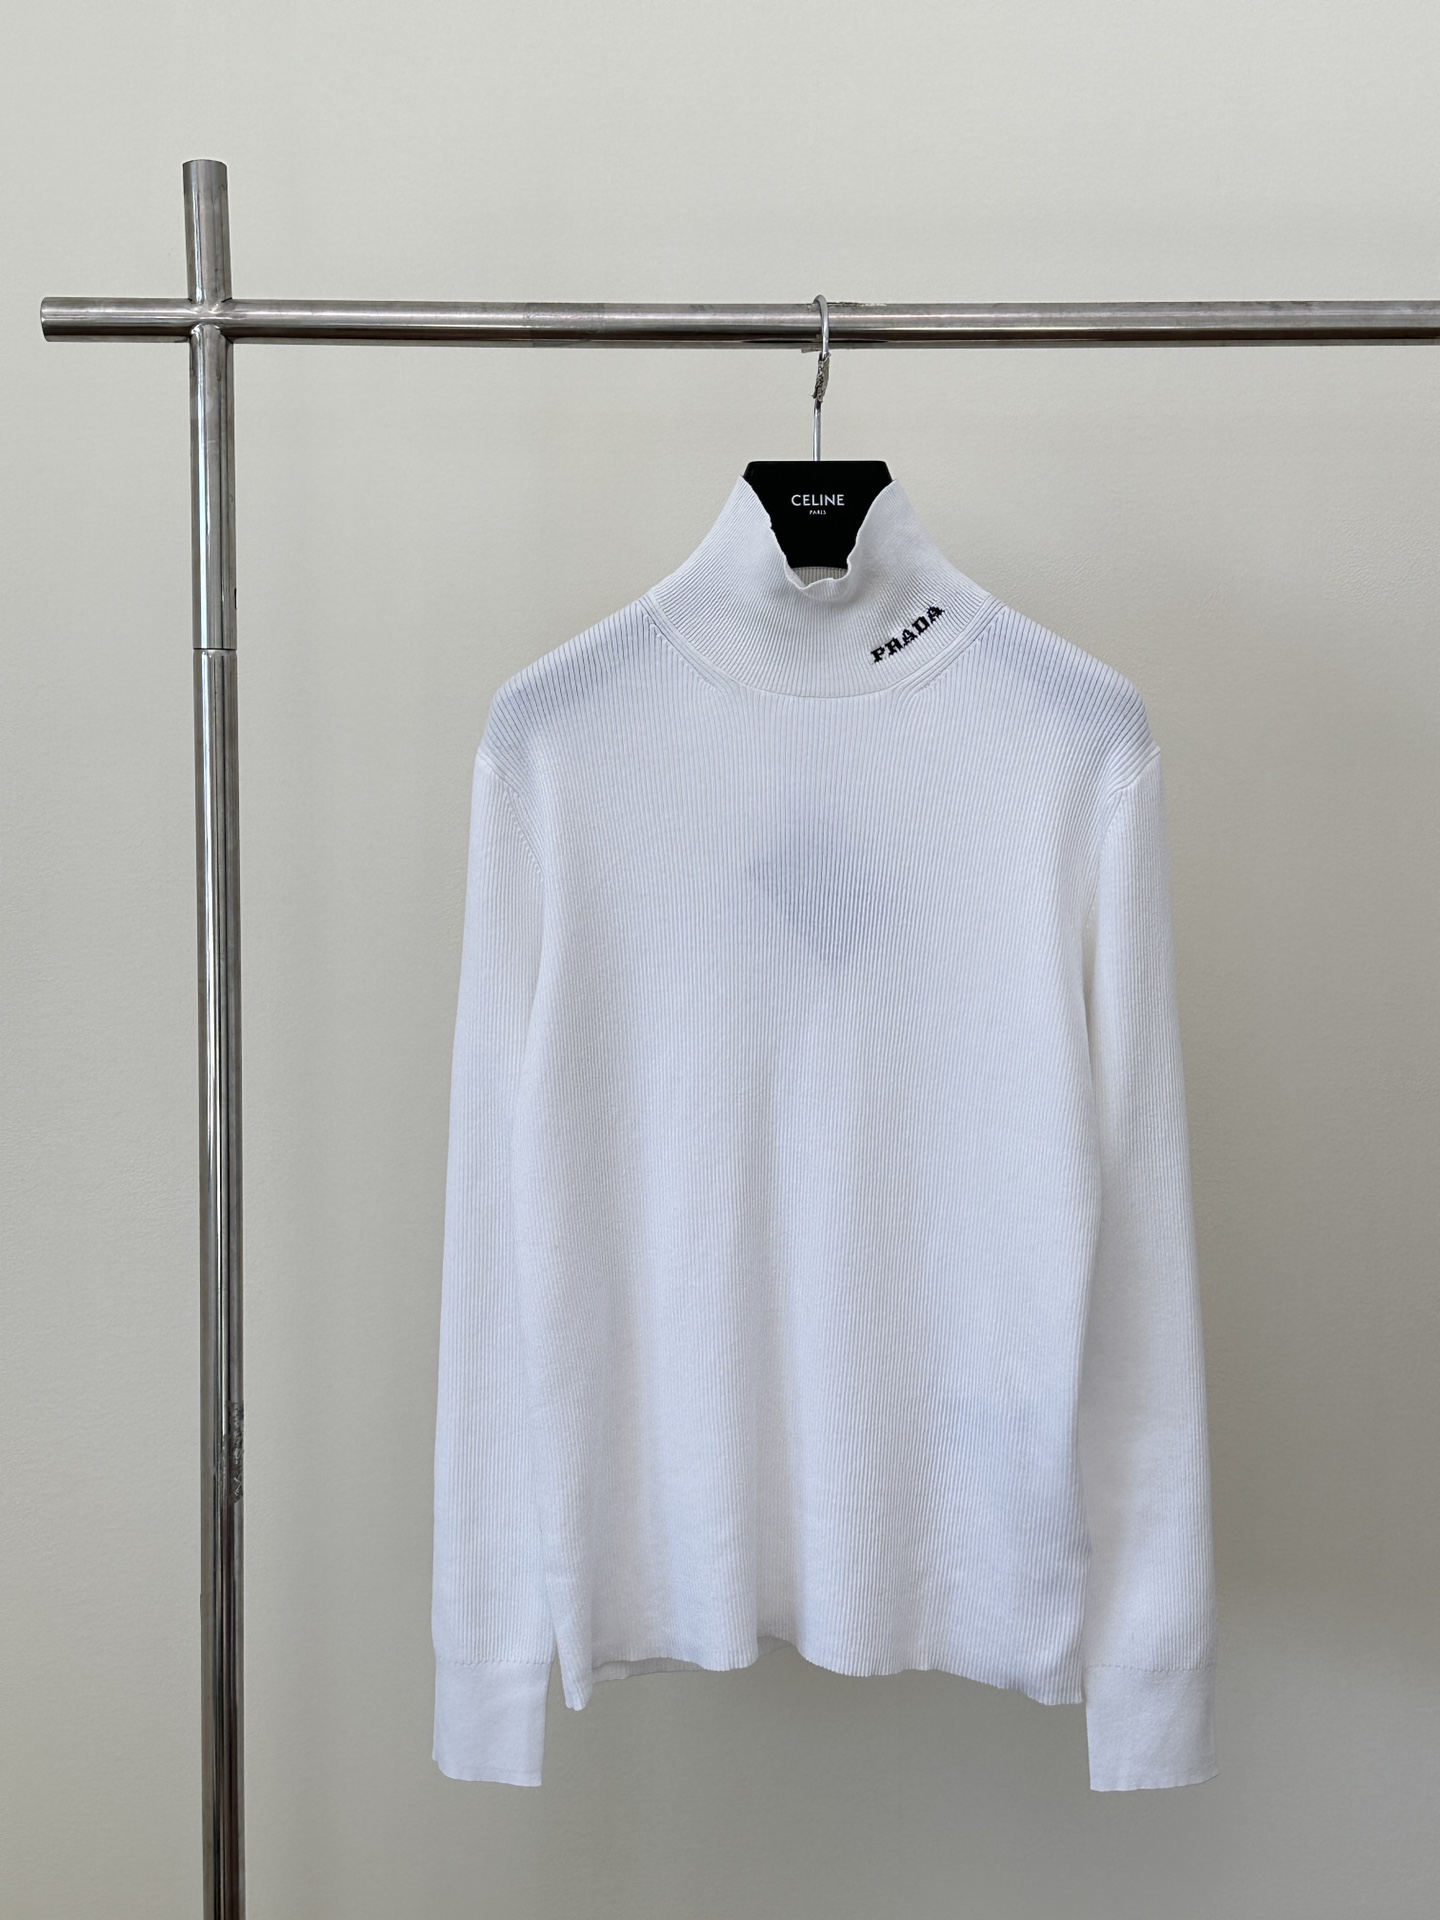 Prada Clothing Sweatshirts White Cotton